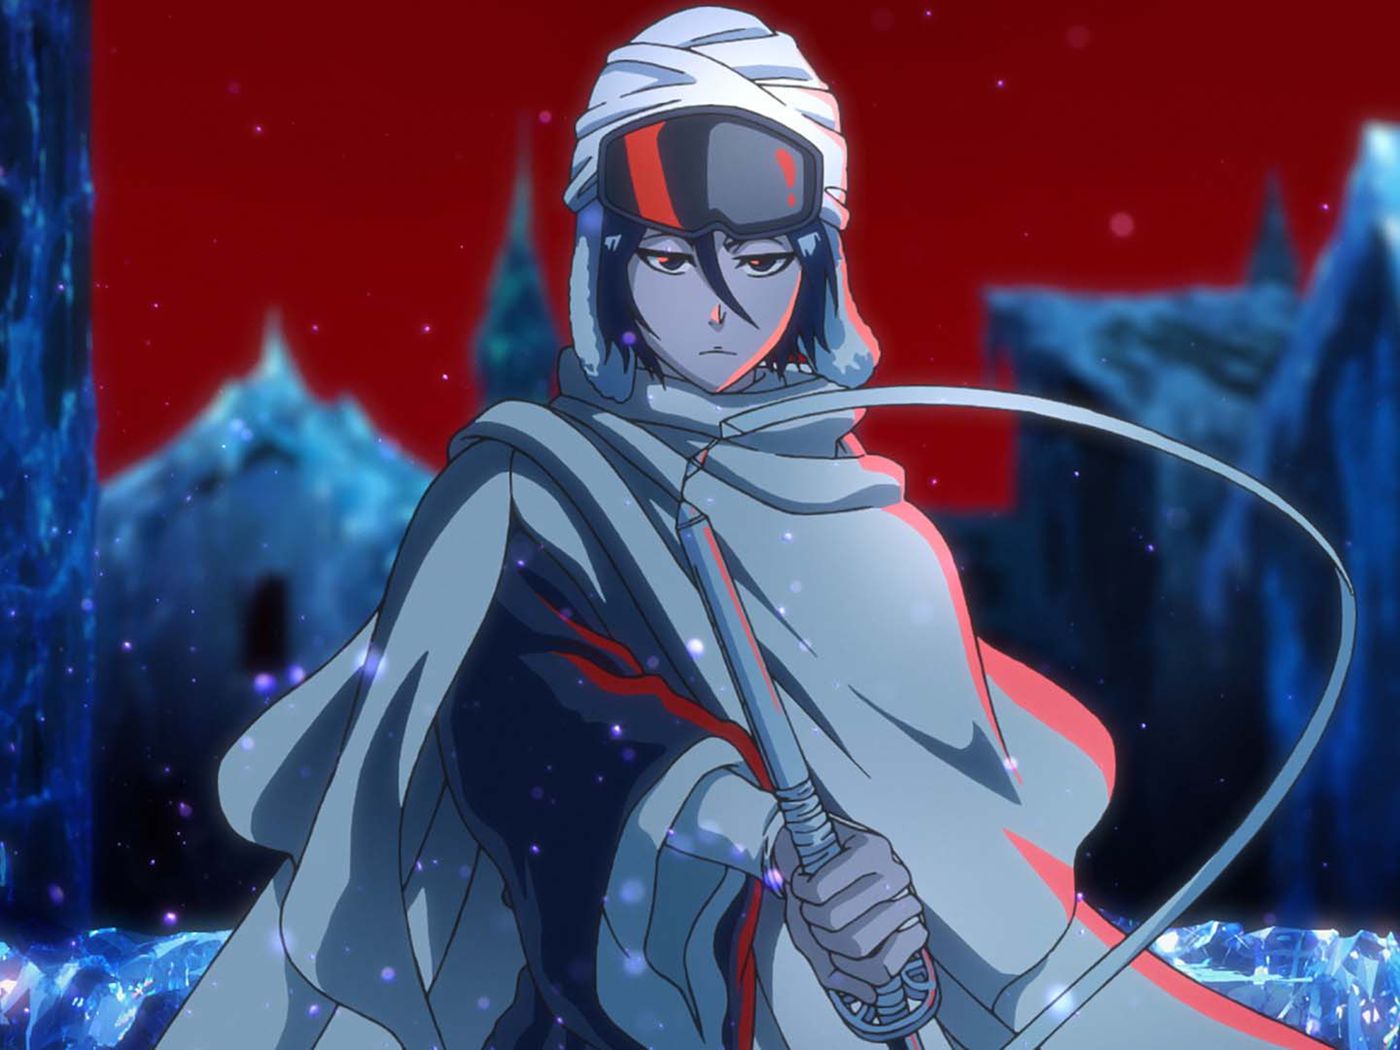 Bleach Thousand Year Blood War anime releasing in fall 2022